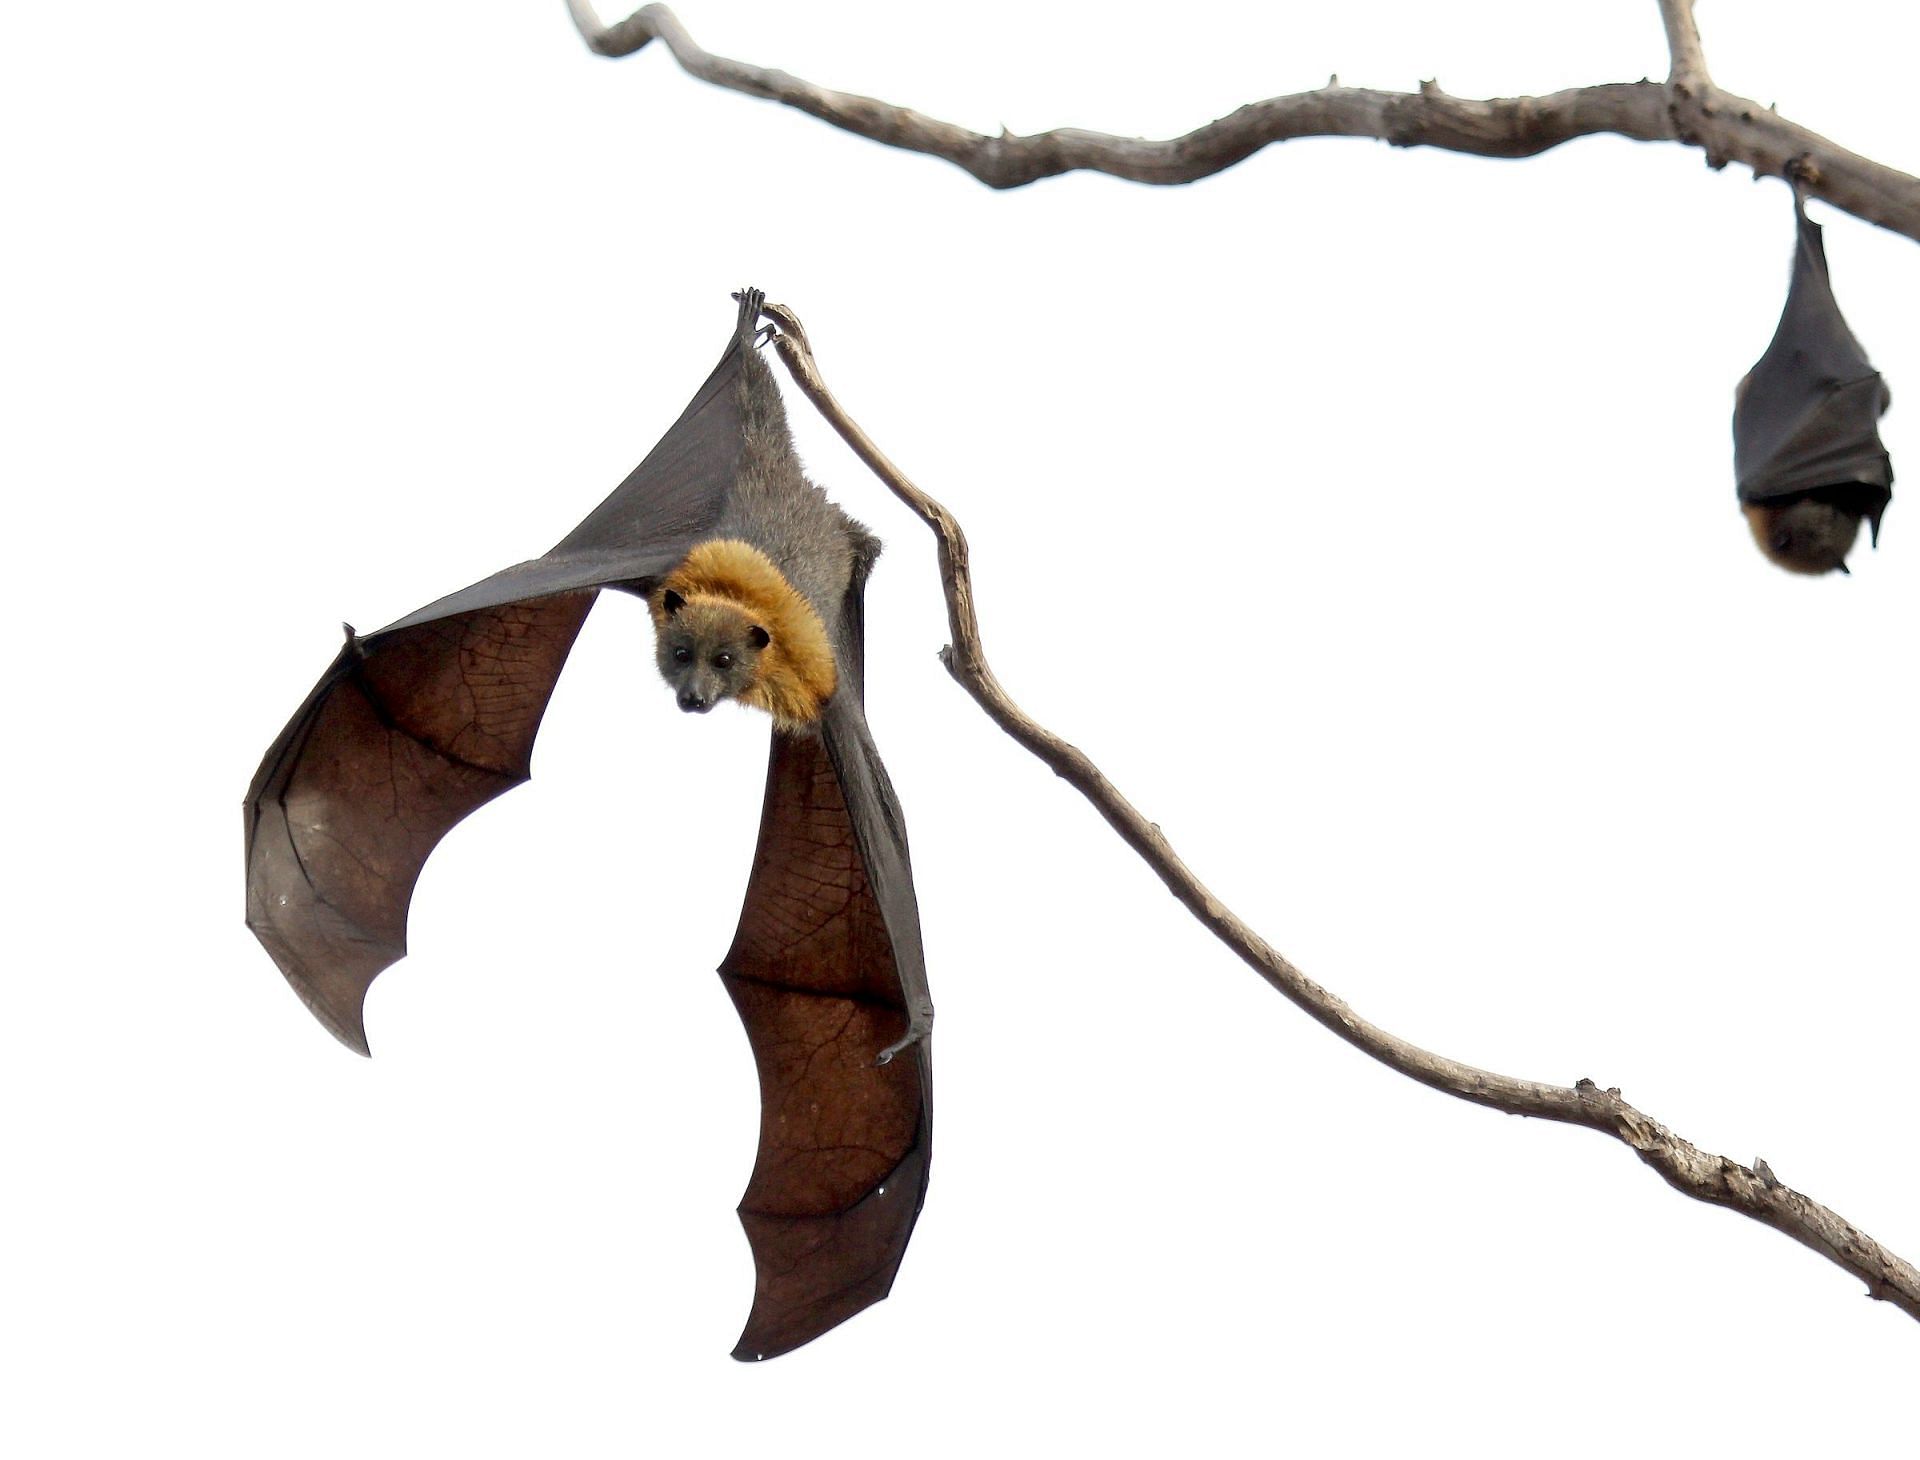 Bat bite a Human (Image via Unsplash/Geoff Brooks)